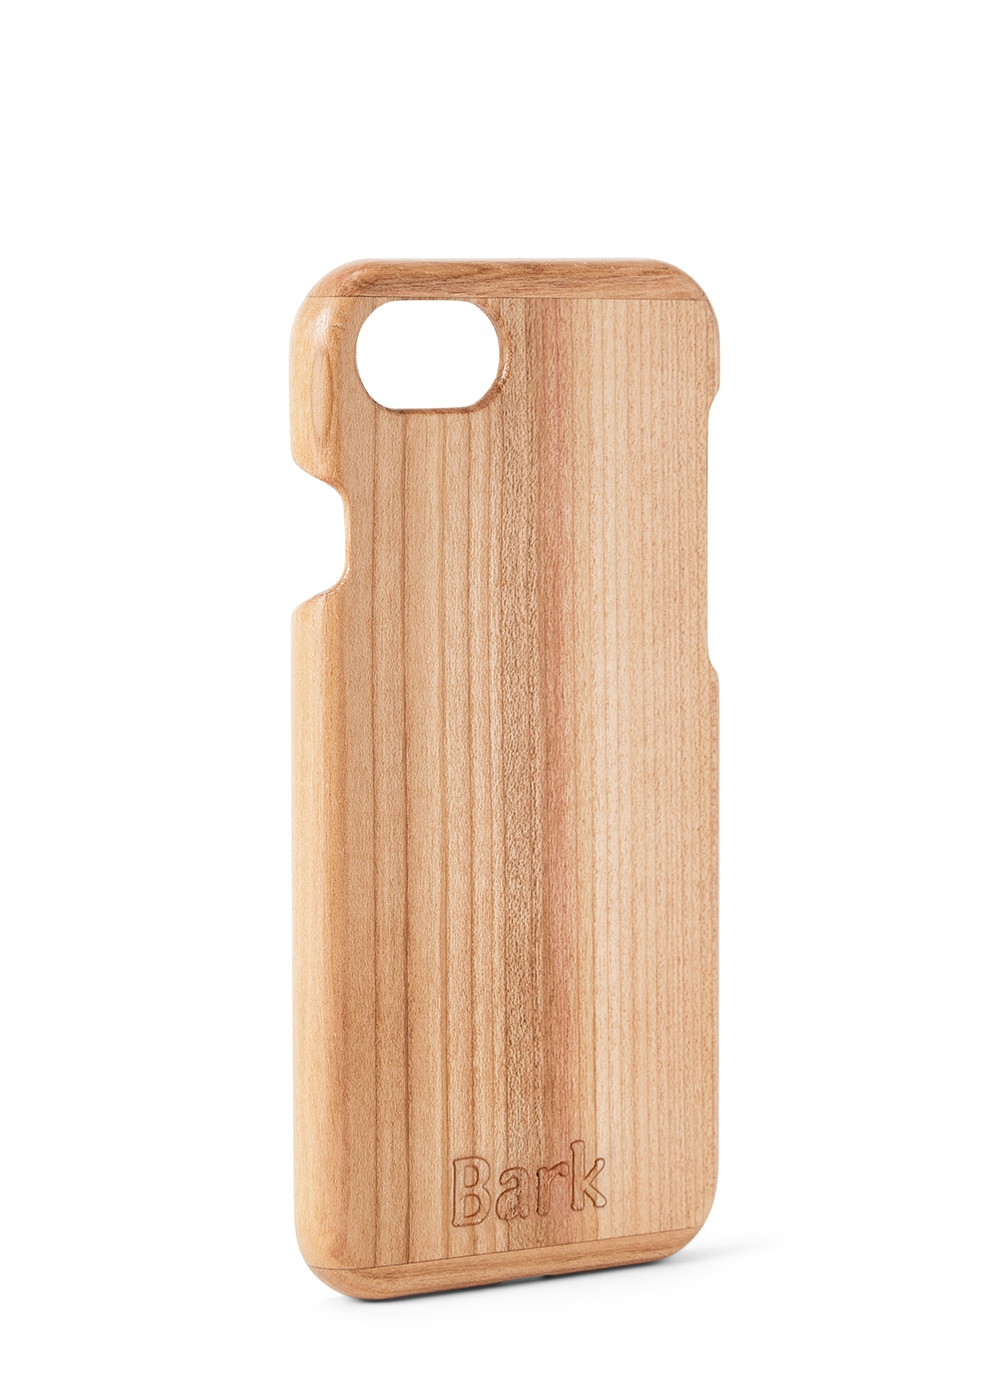 iPhone SE (2020) custodia in legno di latifoglia svedese - Körsbär